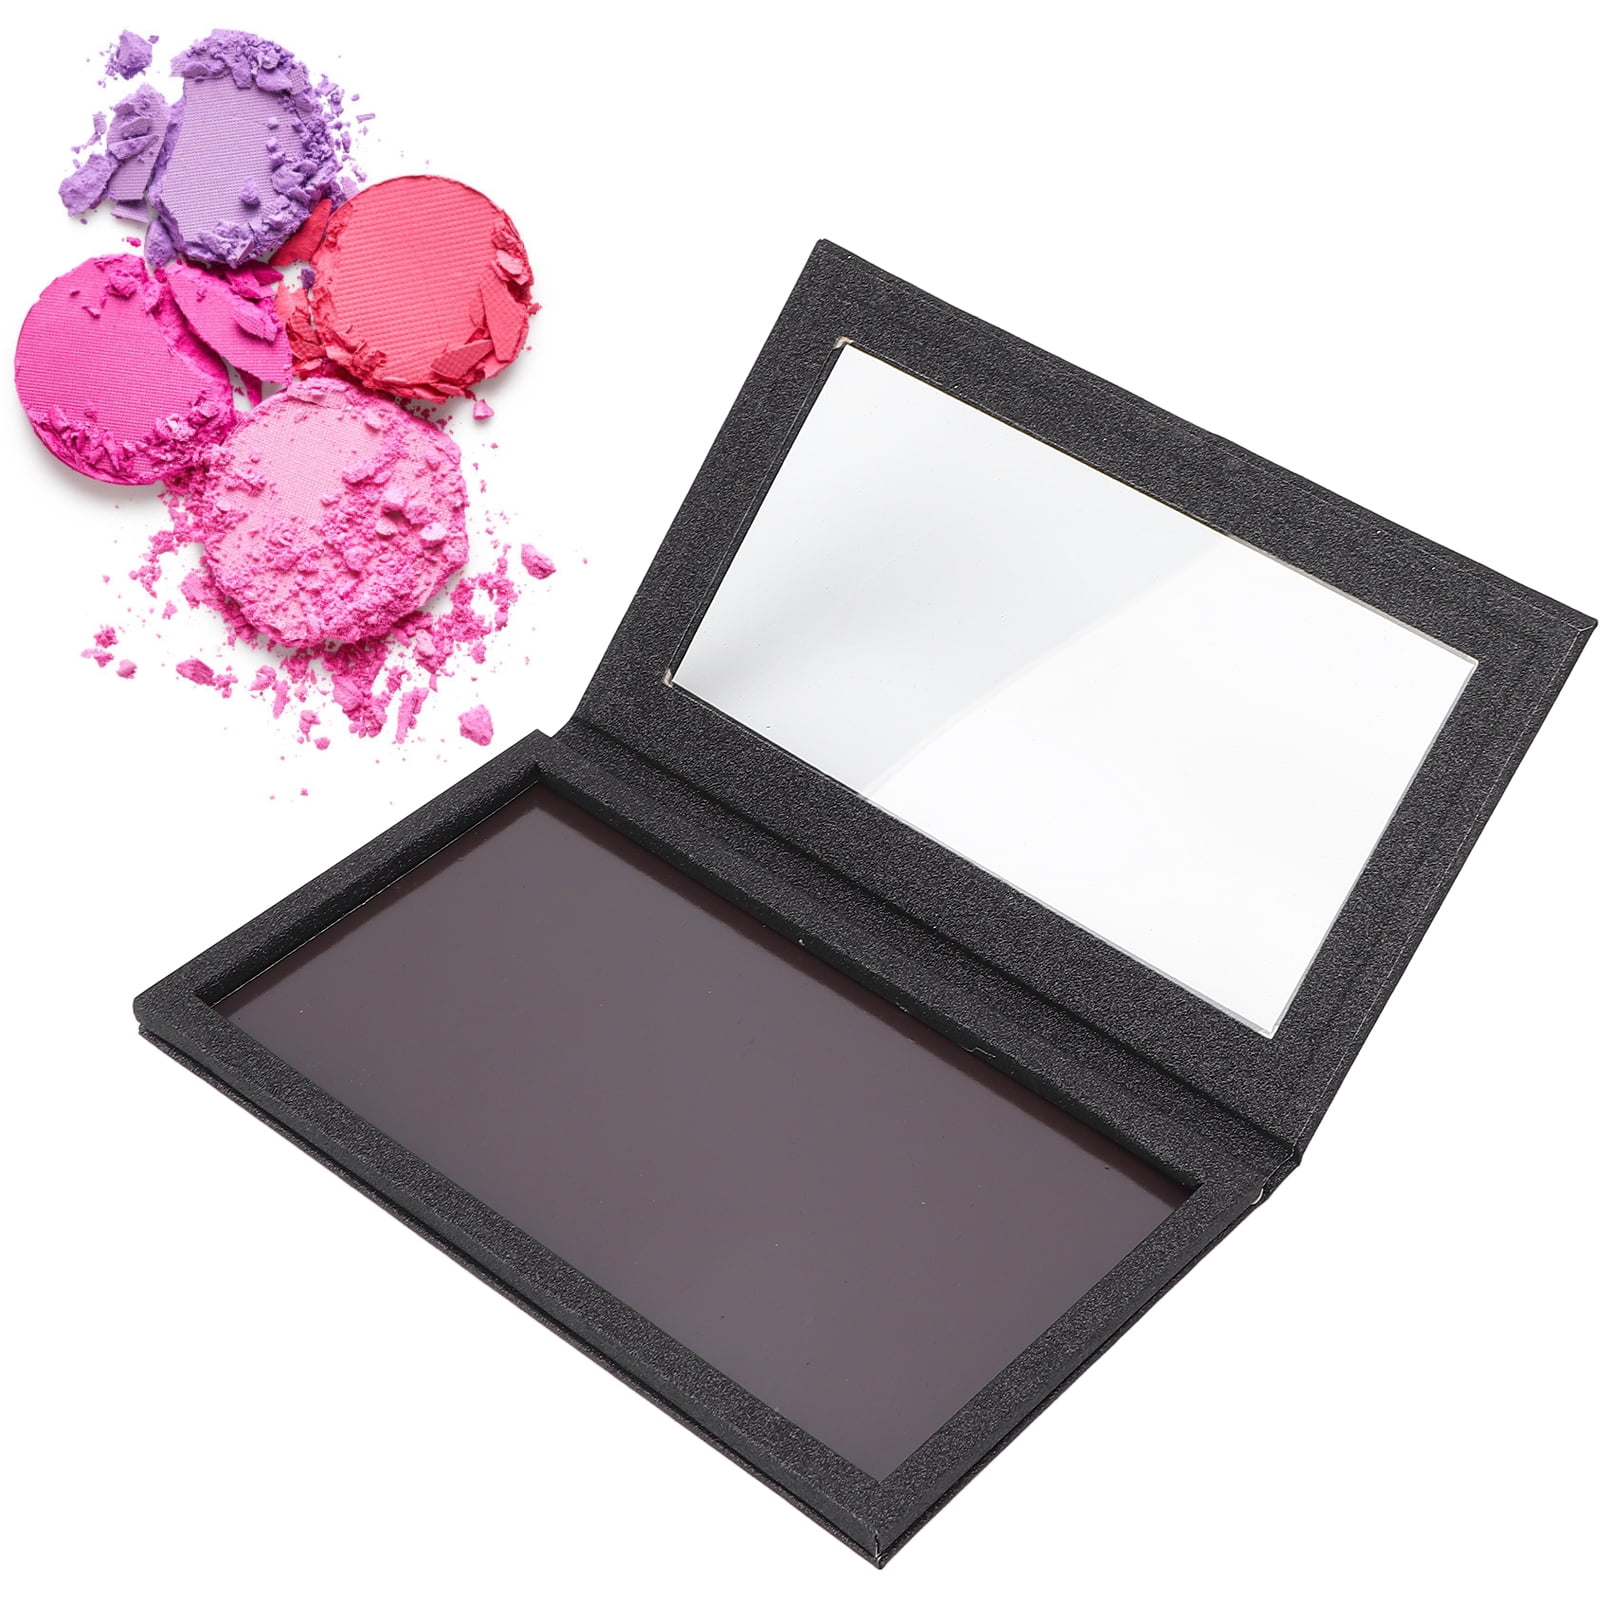 Custom Empty Palette Wholesale - Empty Eyeshadow Palette, Lipstick